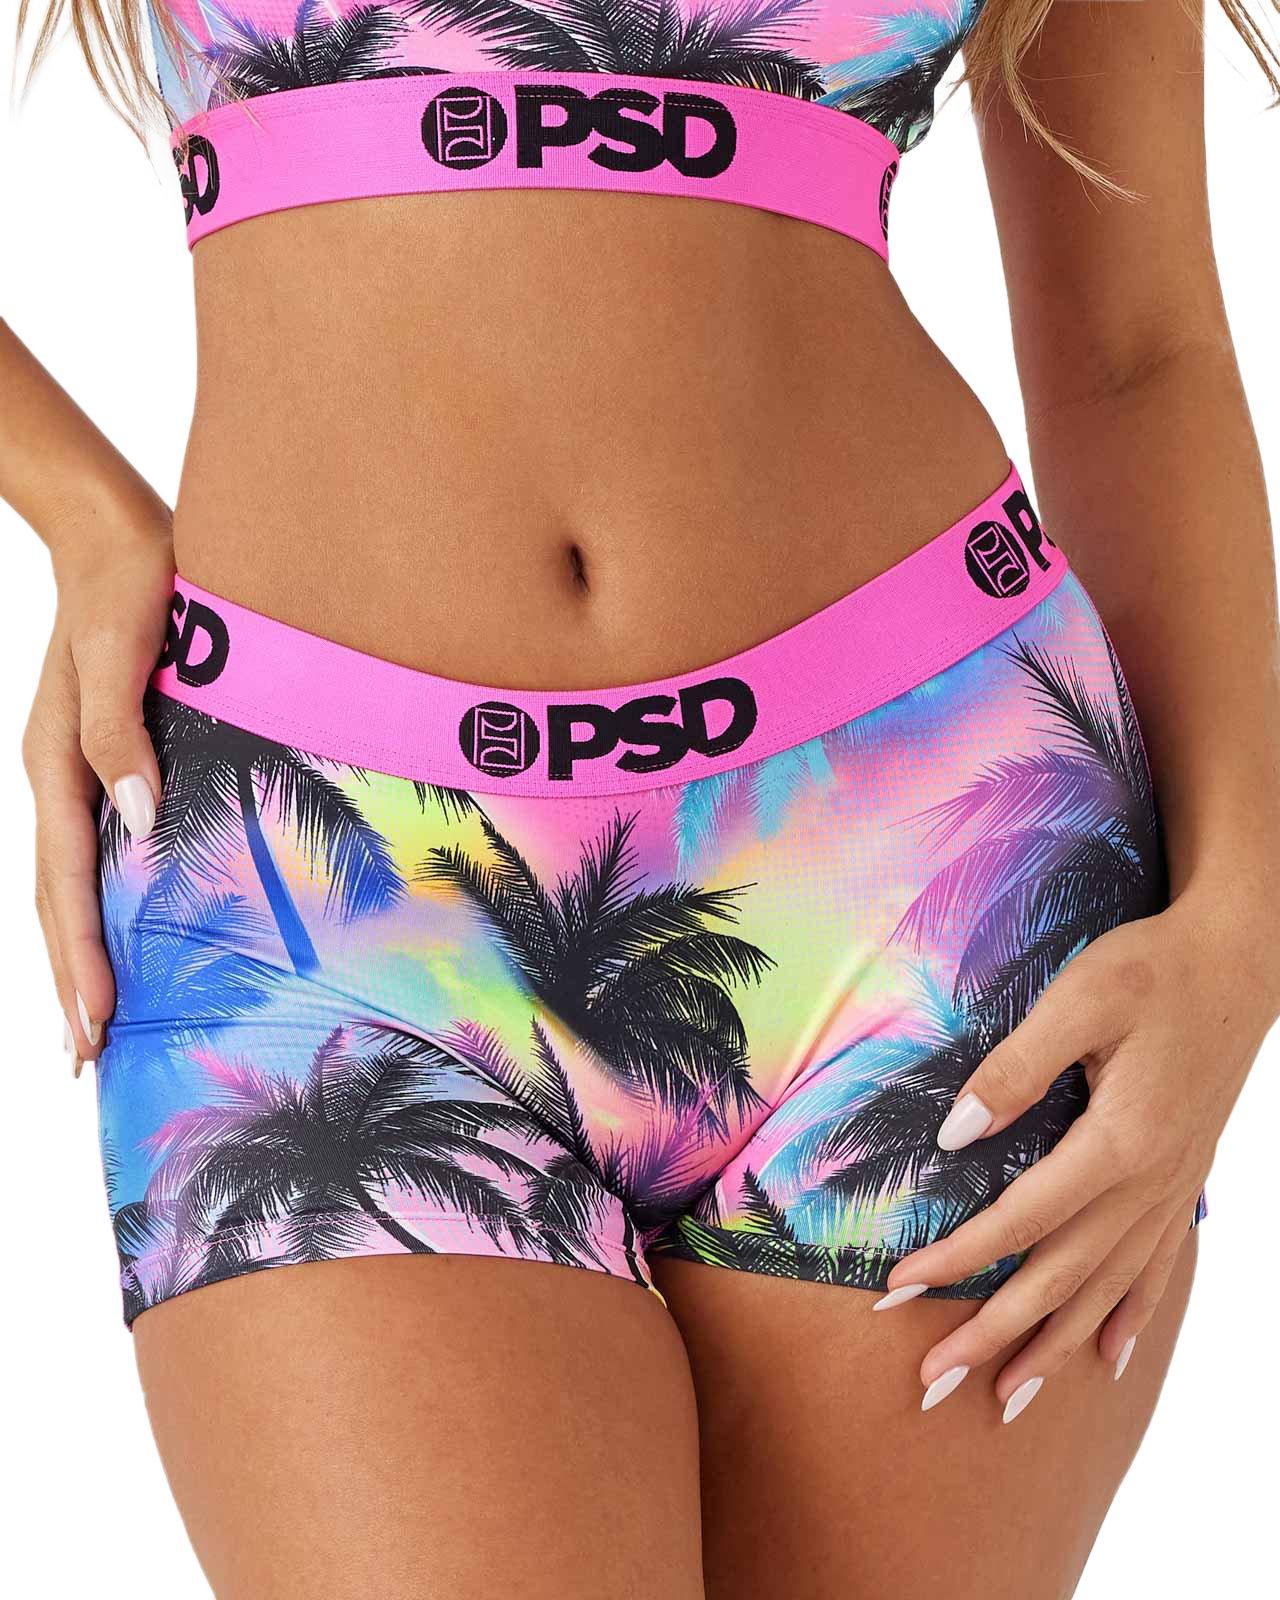 PSD Women's Miami Palm Boy Shorts-Pink/Blue - Hibbett